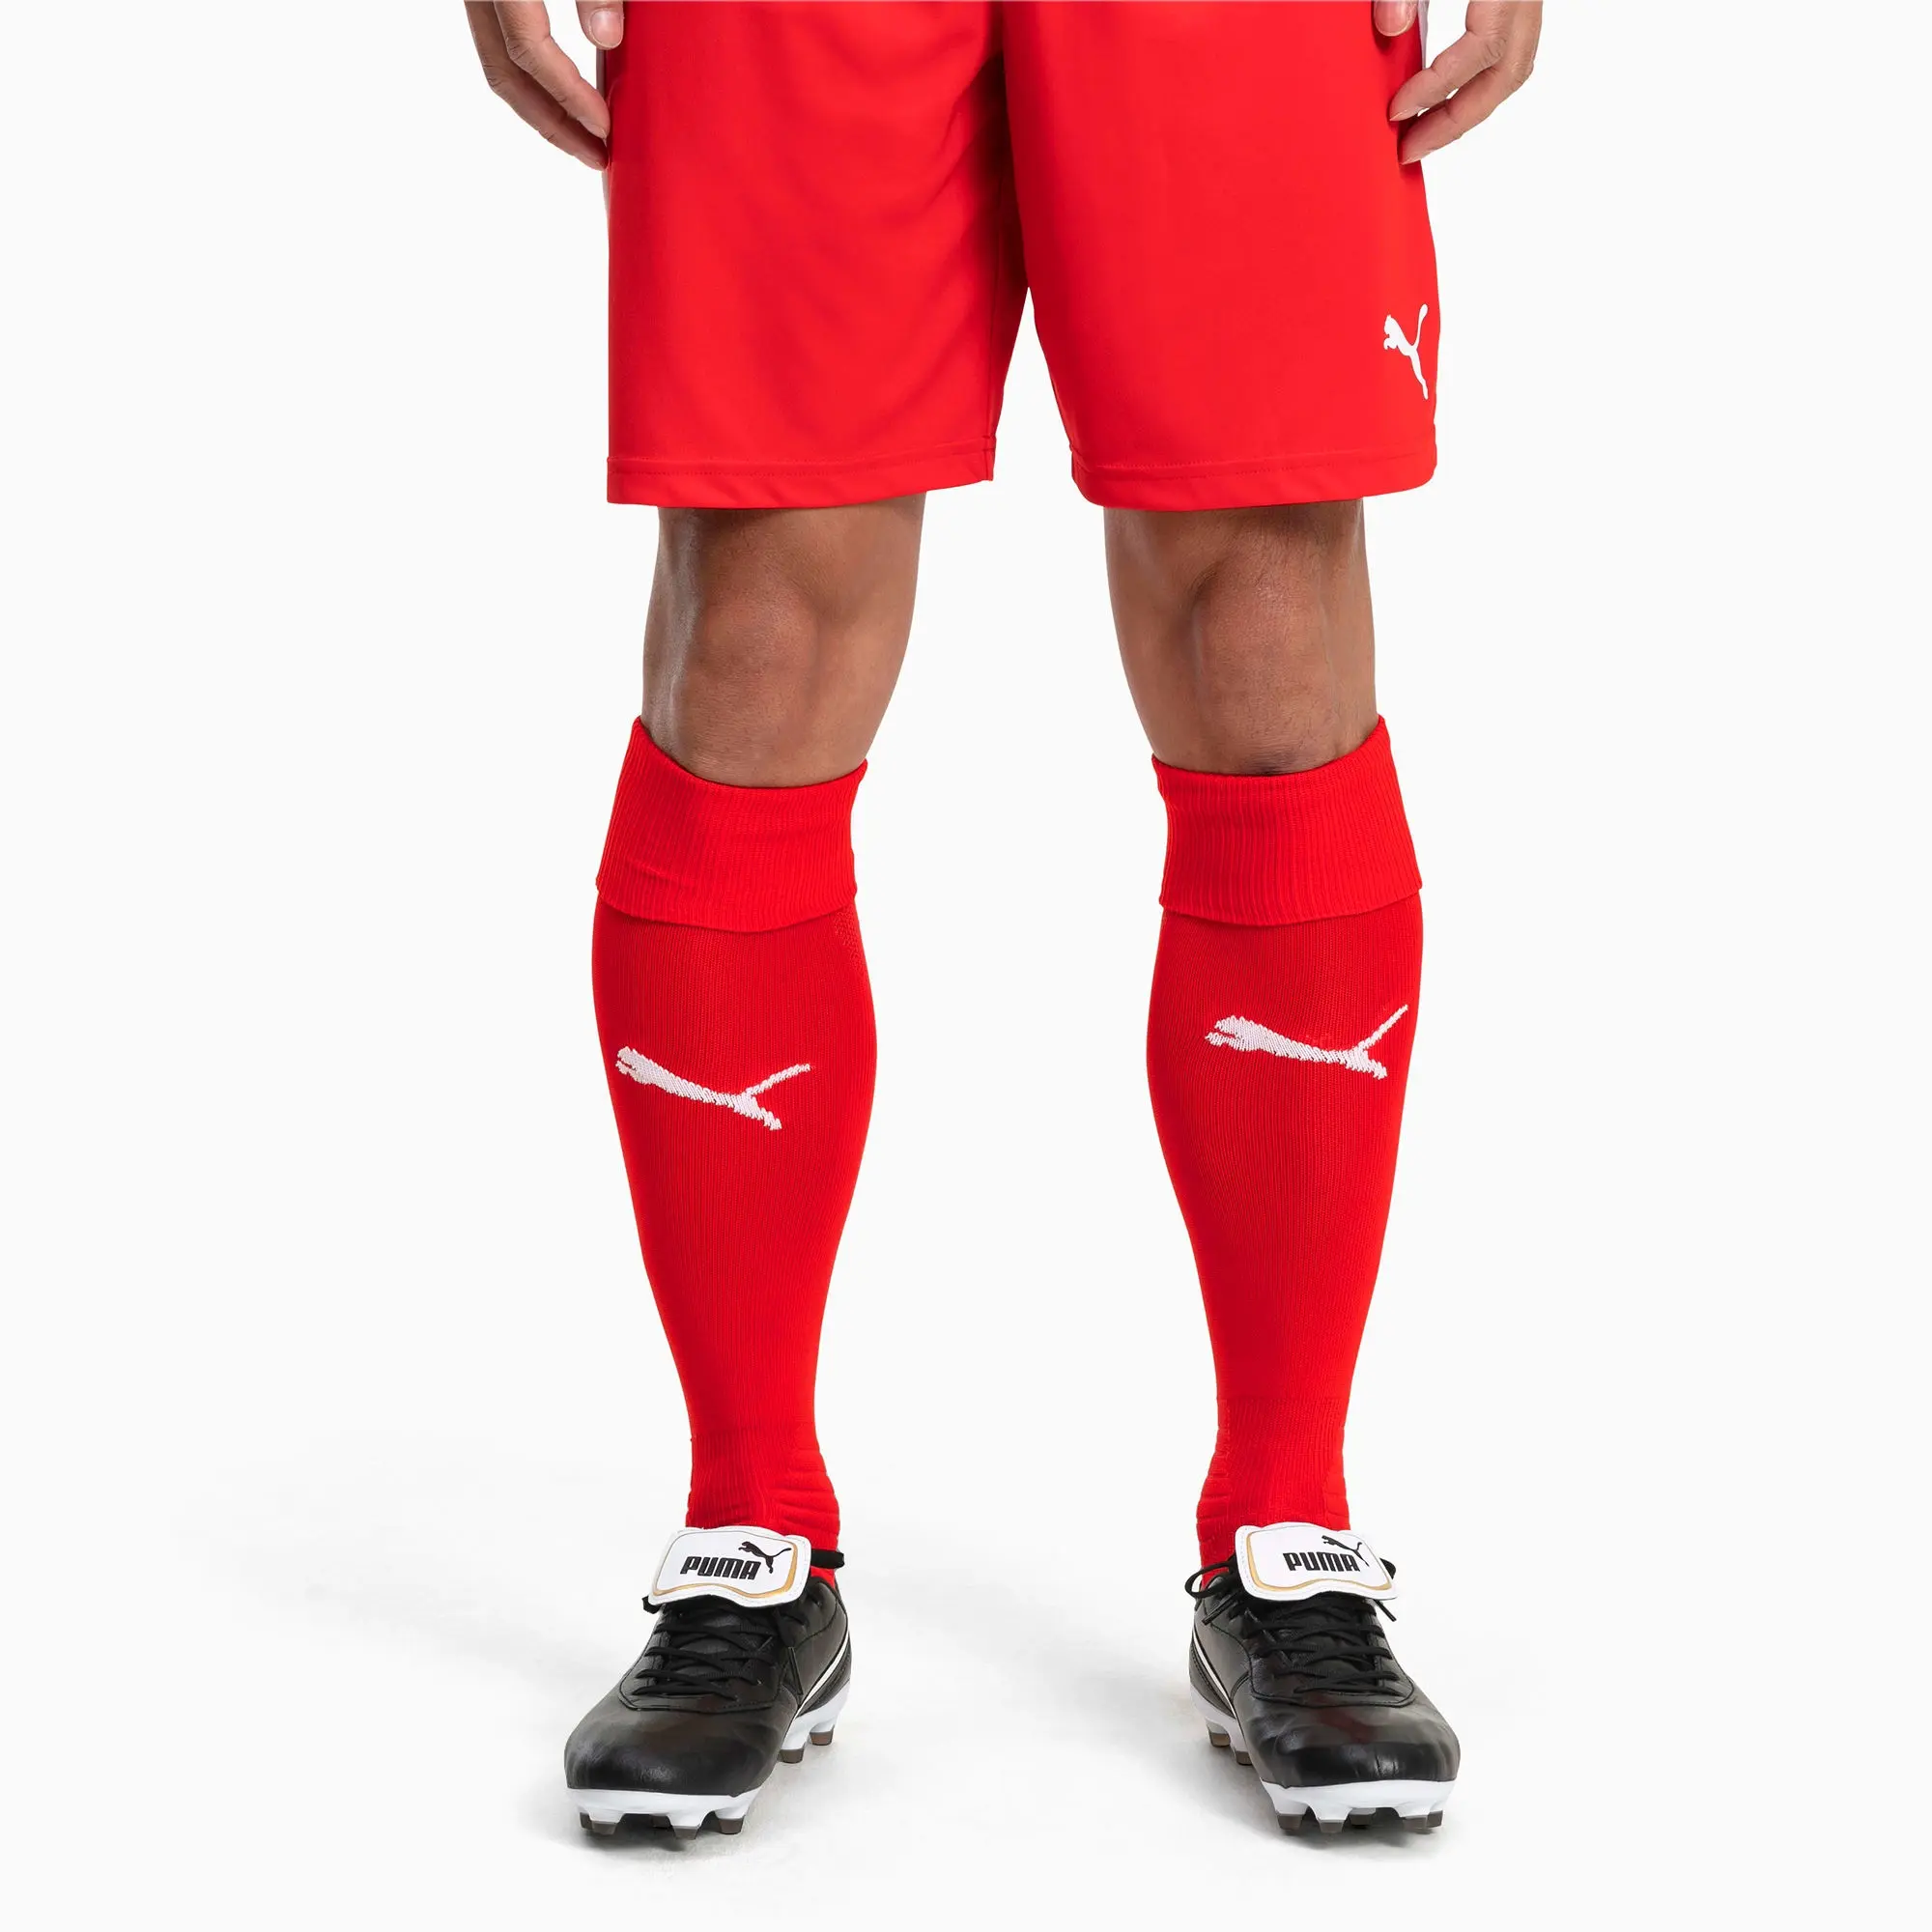 PUMA Liga Football Socks, Red/White